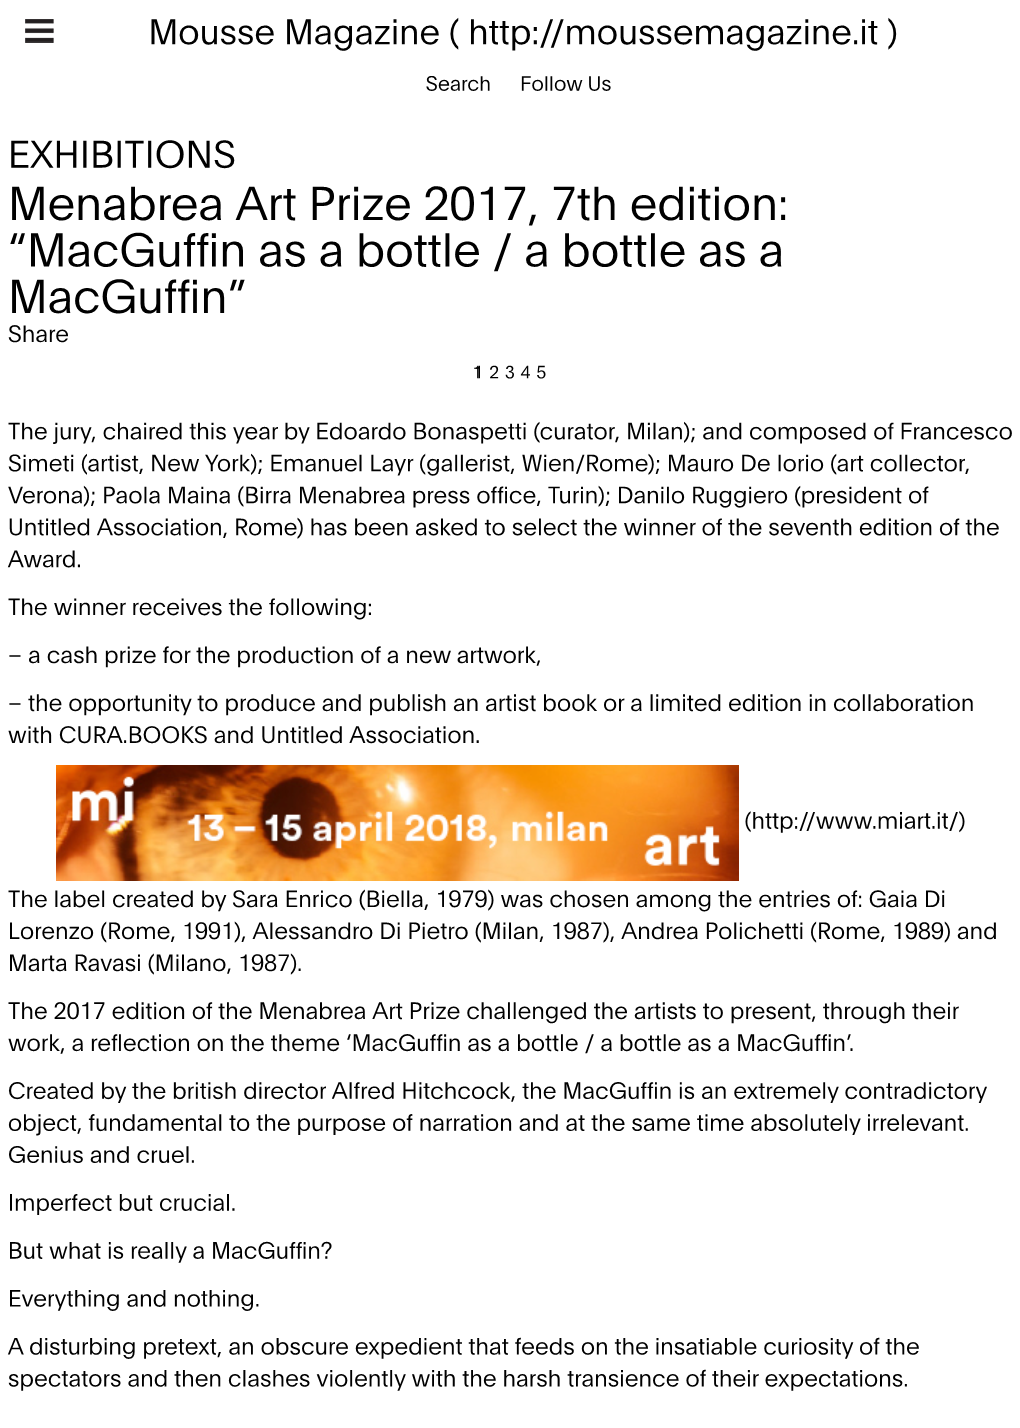 Menabrea Art Prize 2017, 7Th Edition: “Macguffin As a Bottle / a Bottle As a Macguffin”